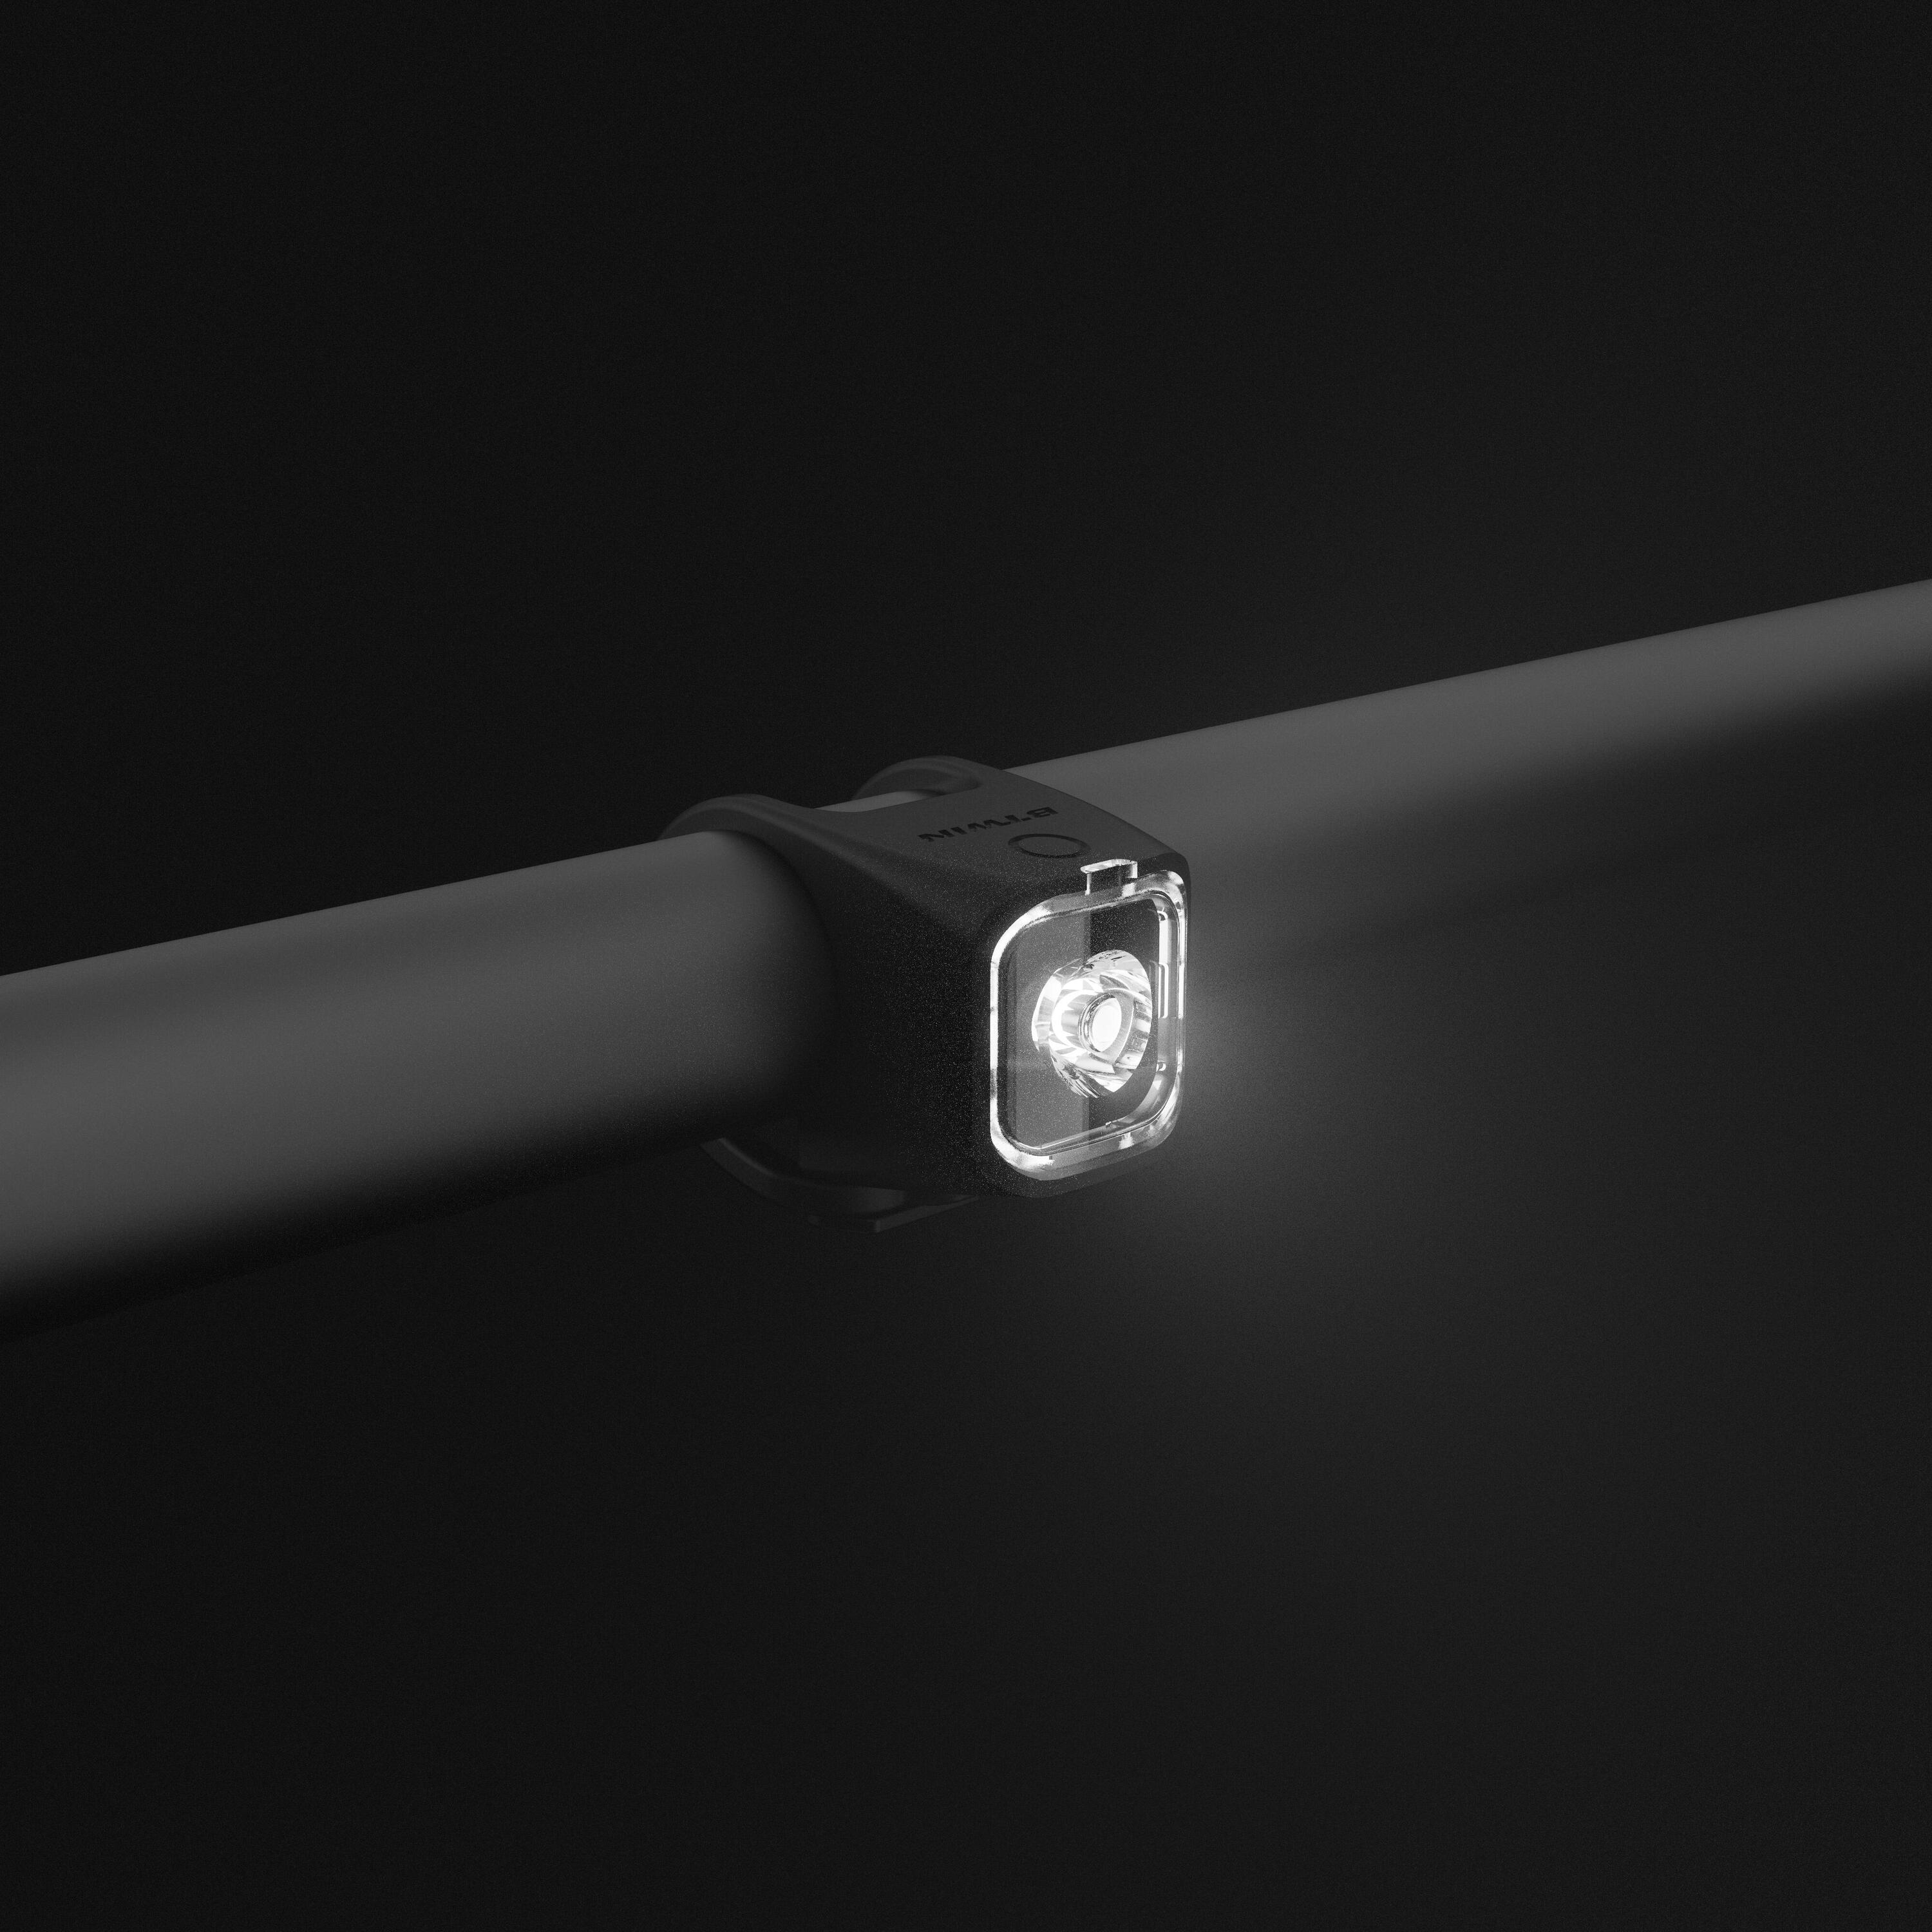 LED Front / Rear USB Bike Light SL 500 25 Lumens - Black 4/7